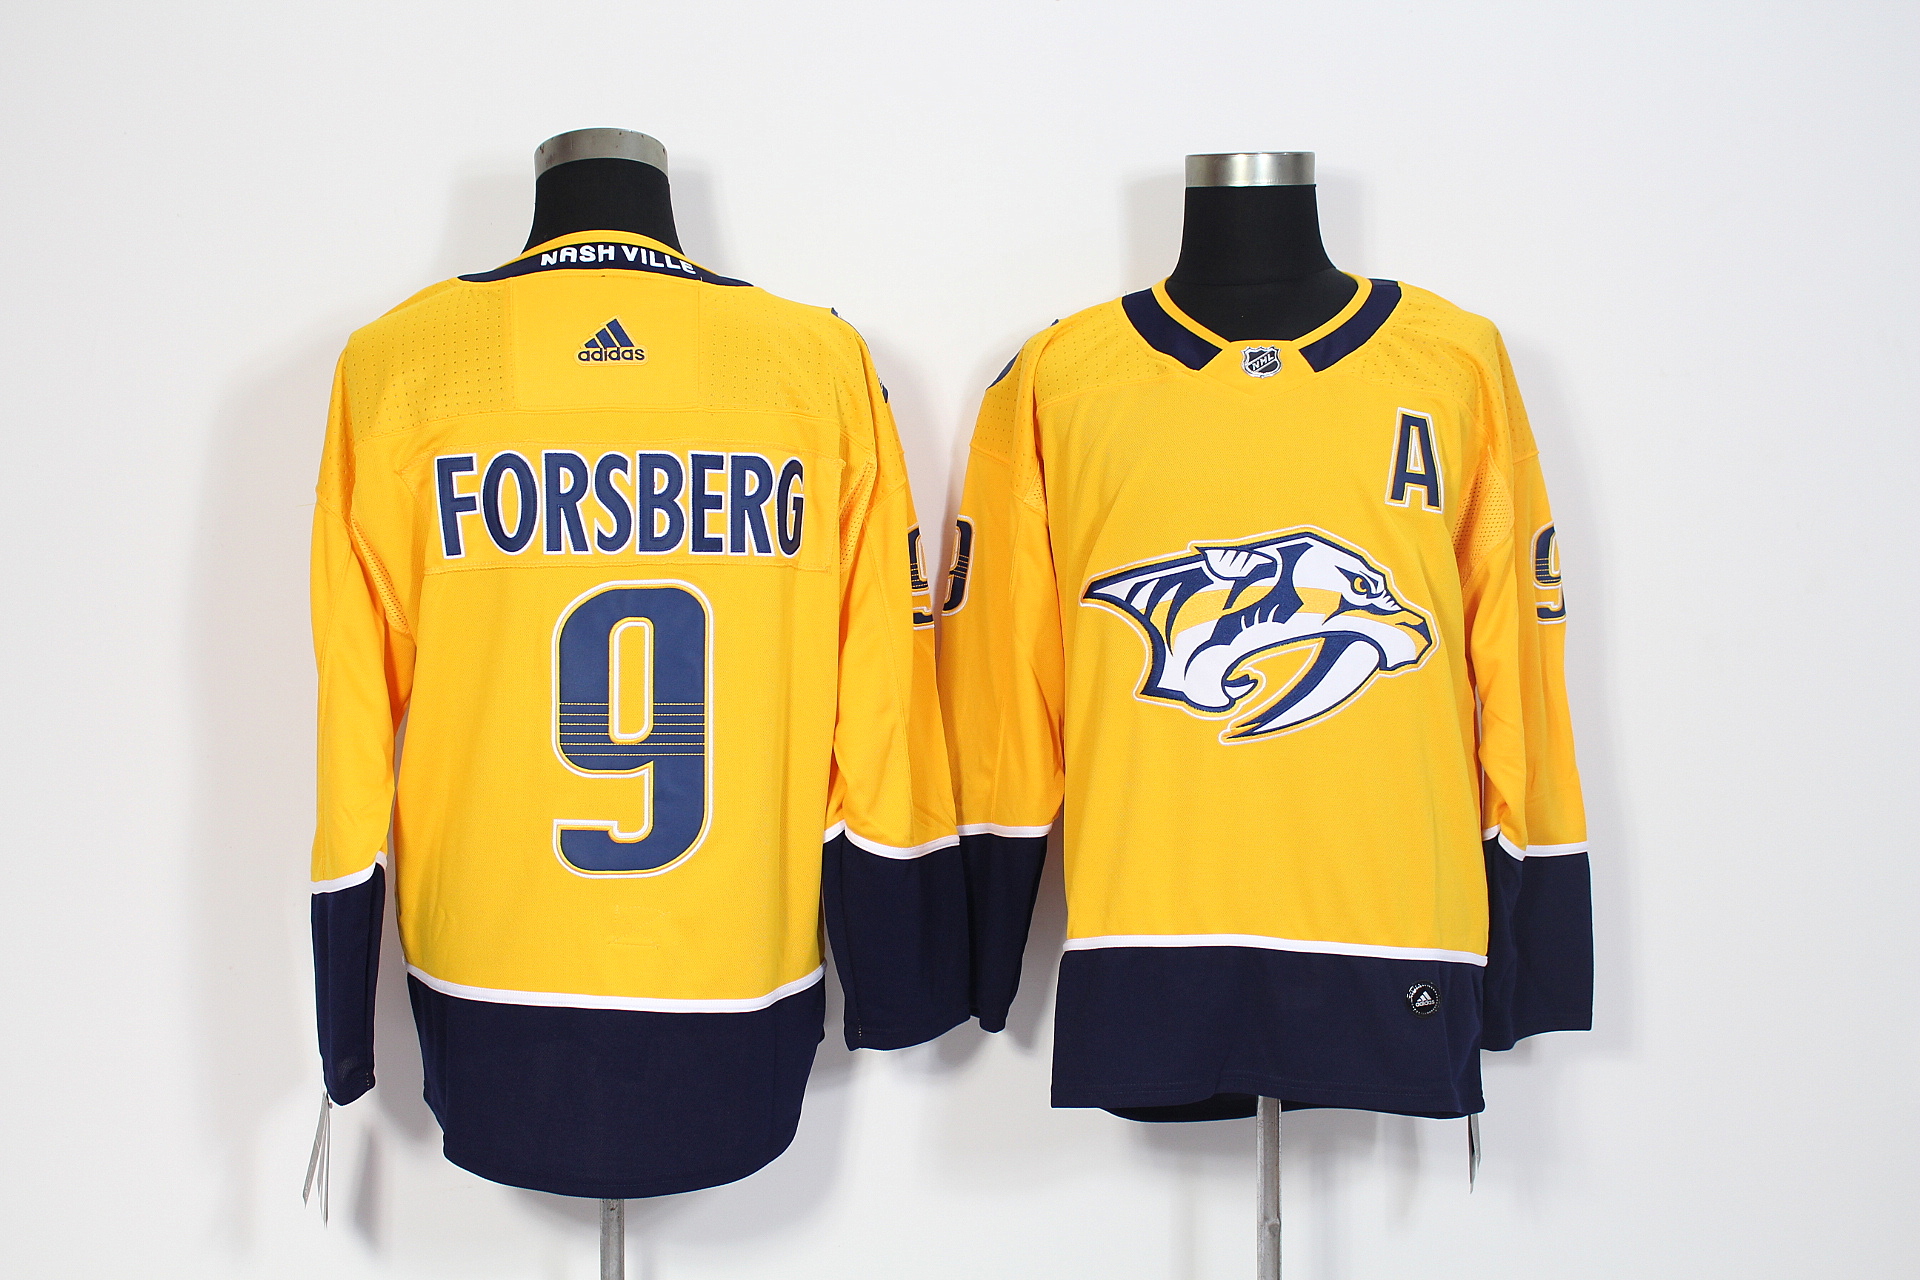 Men's Adidas Nashville Predators #9 Filip Forsberg Yellow Stitched NHL Jersey